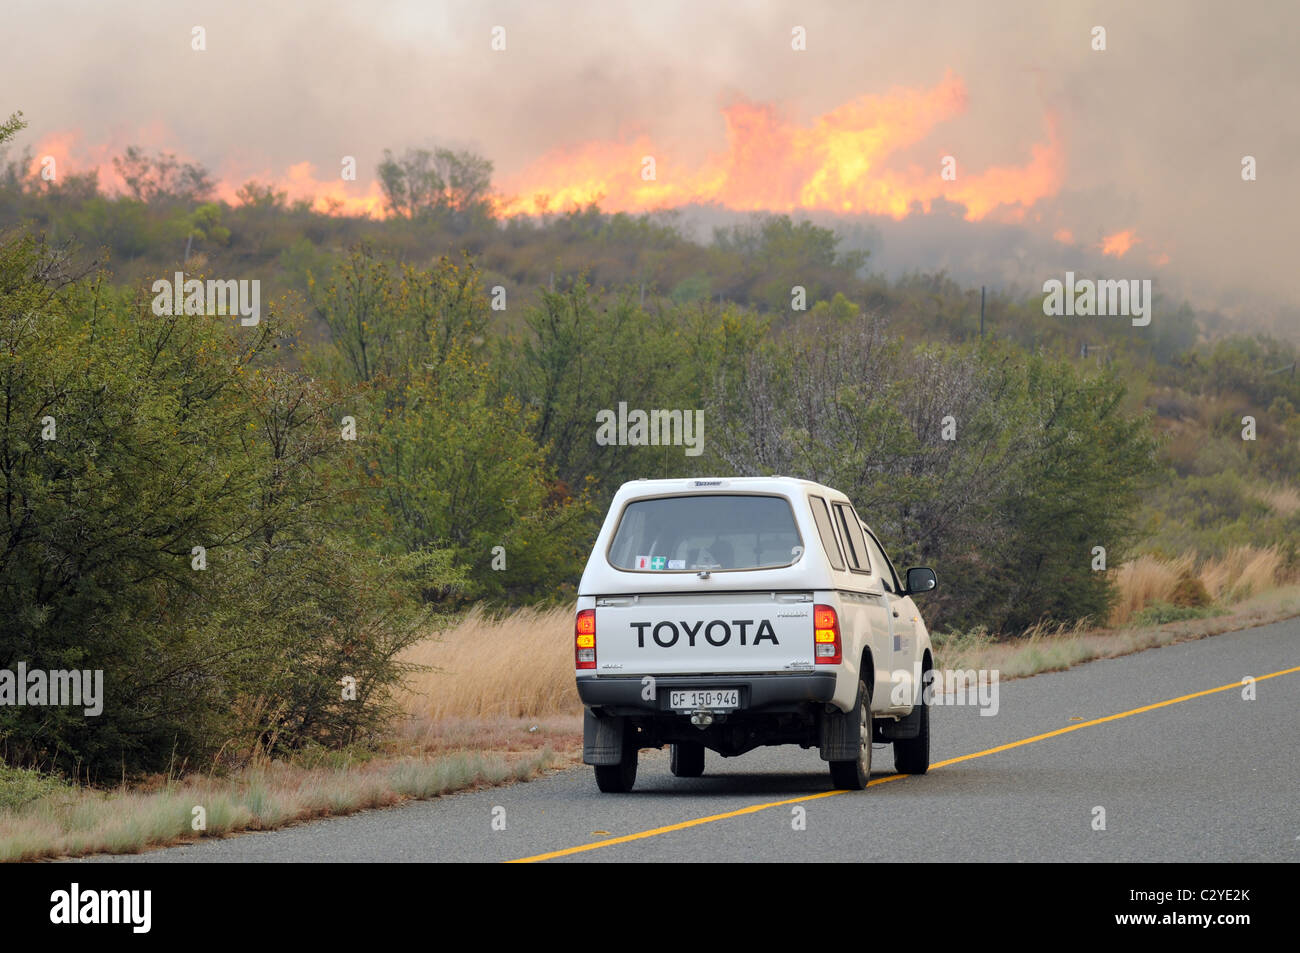 Bush fire, road, cars, smoke, flames, dark skies Stock Photo